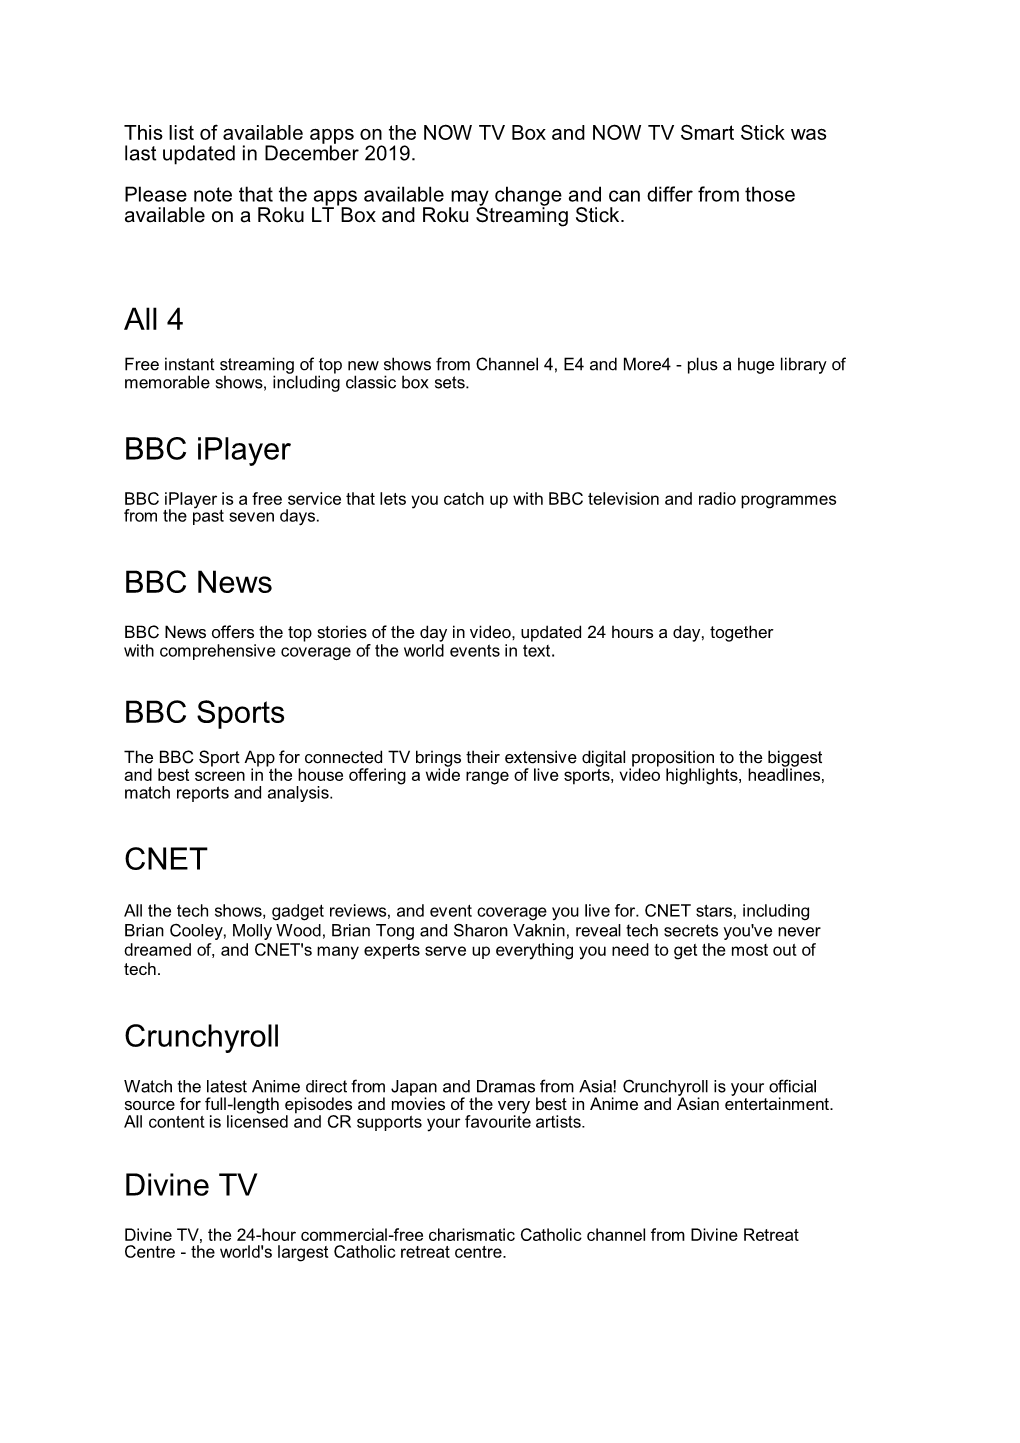 4 BBC Iplayer BBC News BBC Sports CNET Crunchyroll Divine TV